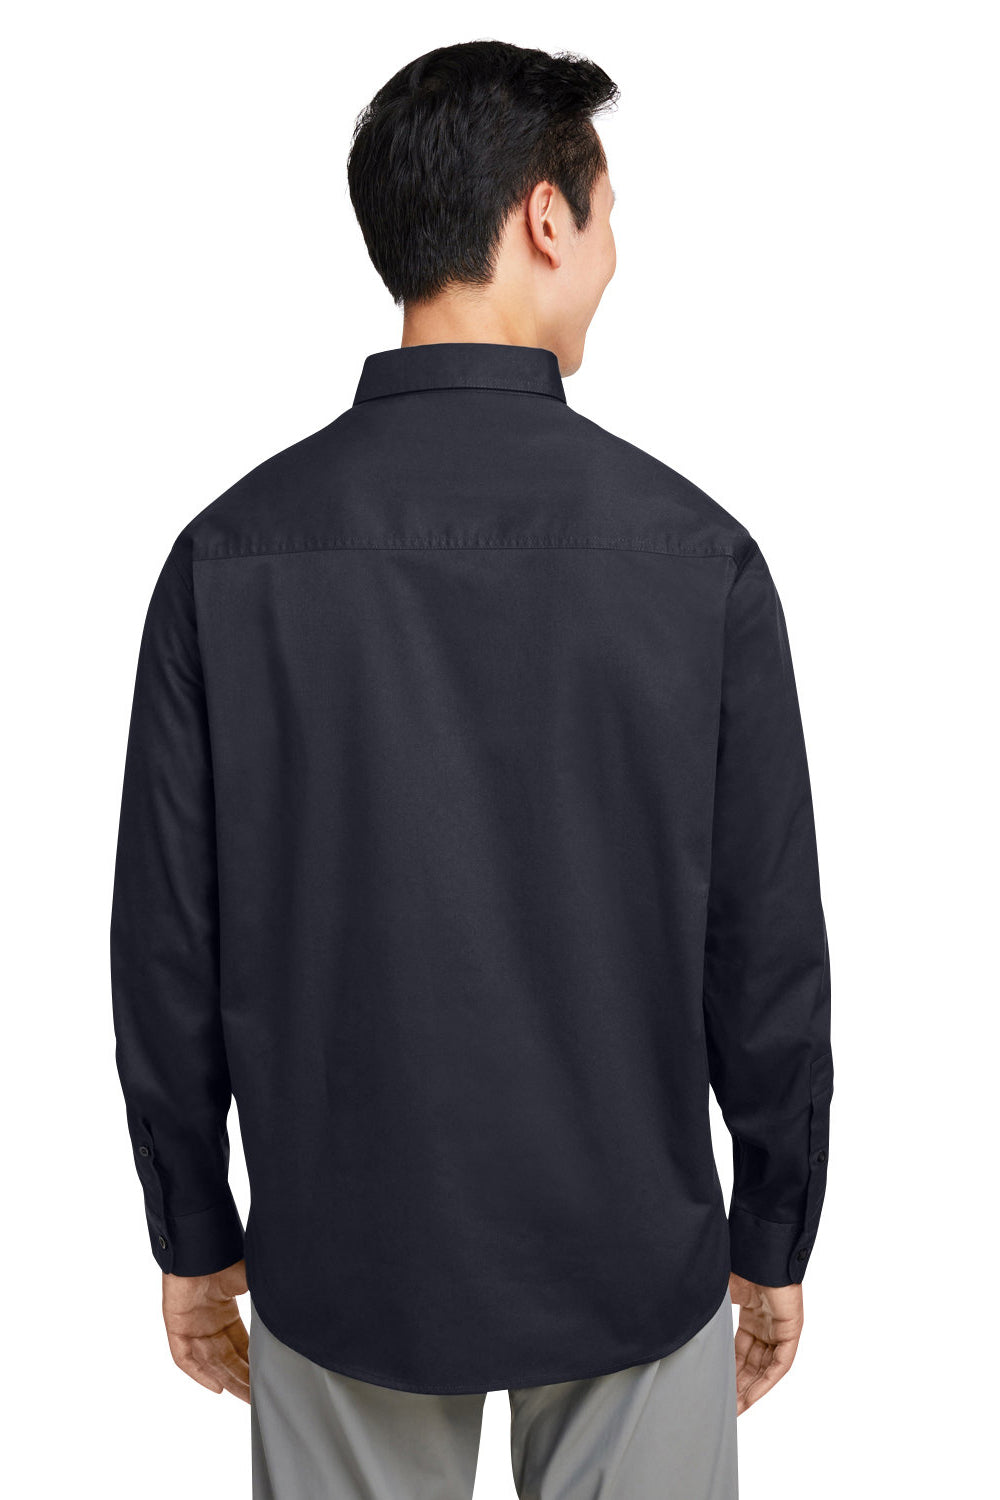 Harriton M585L Mens Advantage Long Sleeve Button Down Shirt w/ Double Pockets Black Back